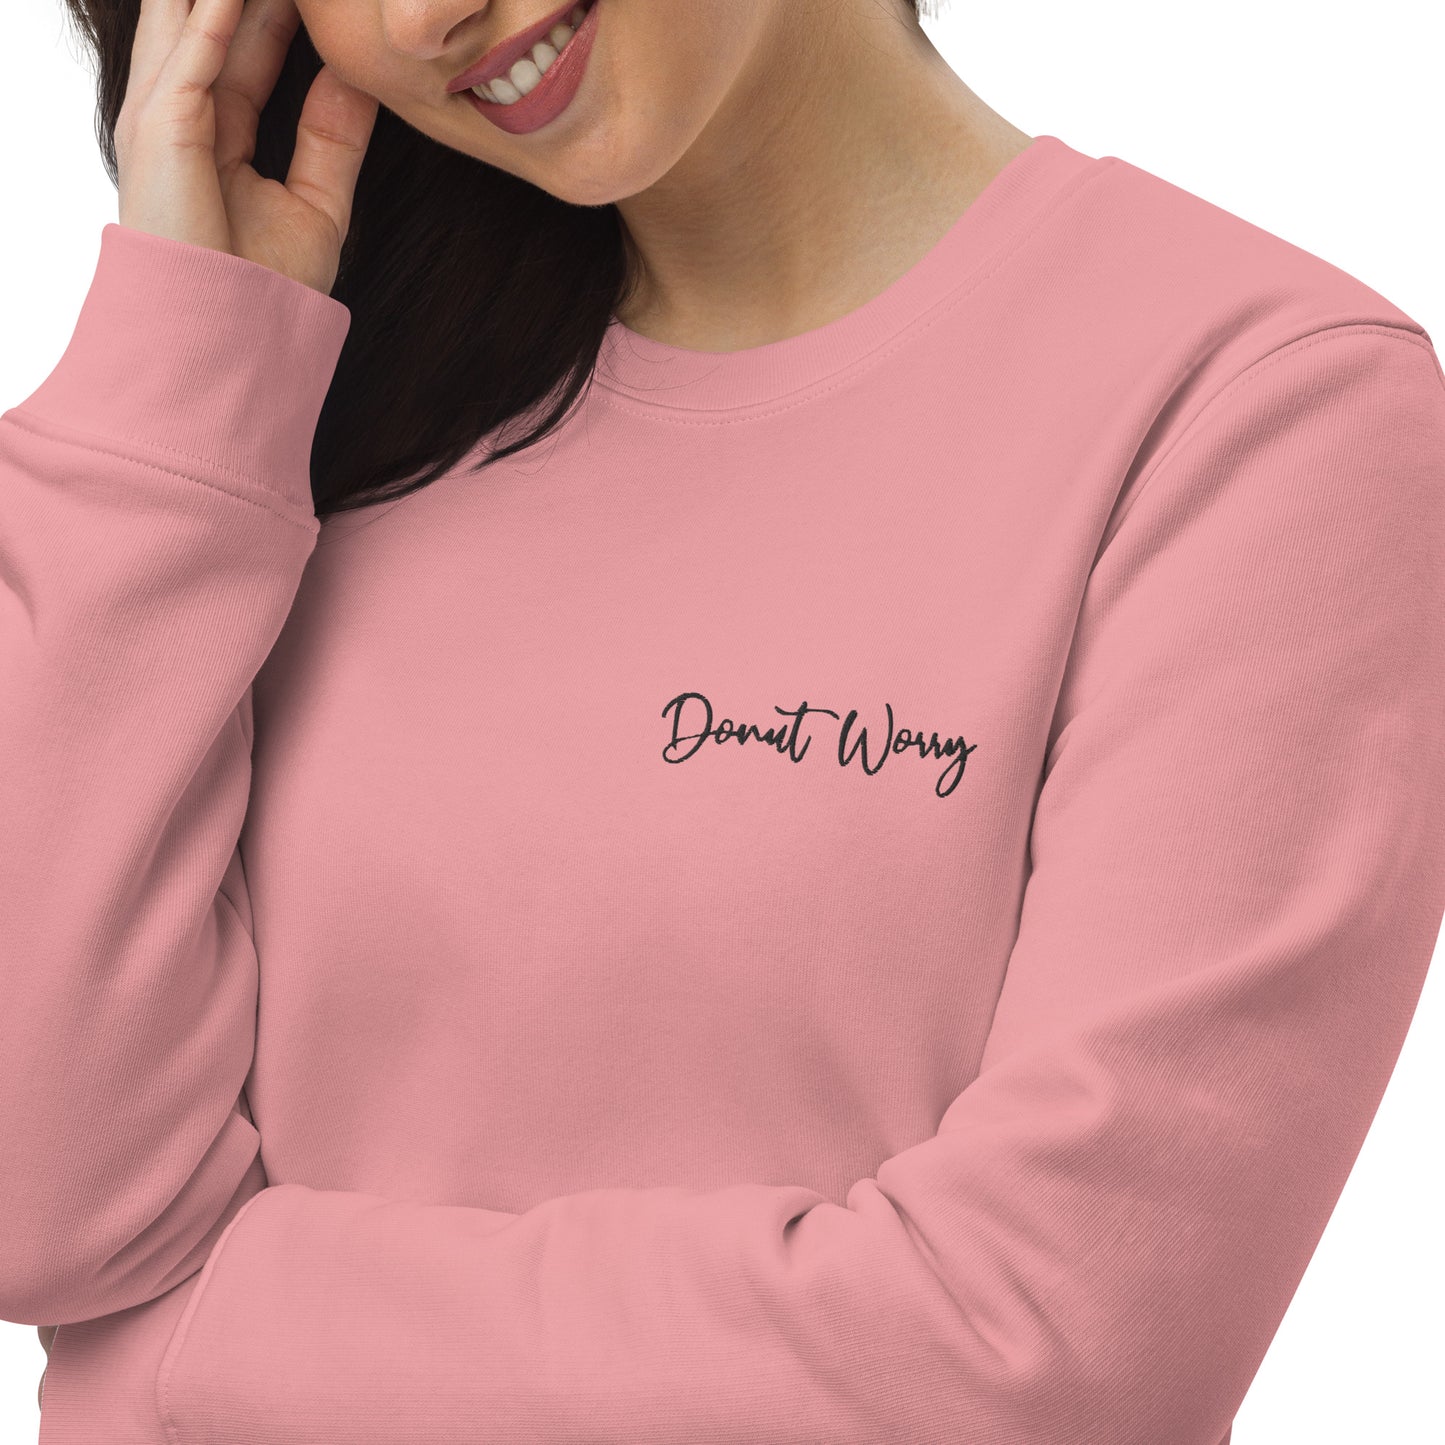 Donut Worry Women's Oversized Organic Cotton Sweatshirt